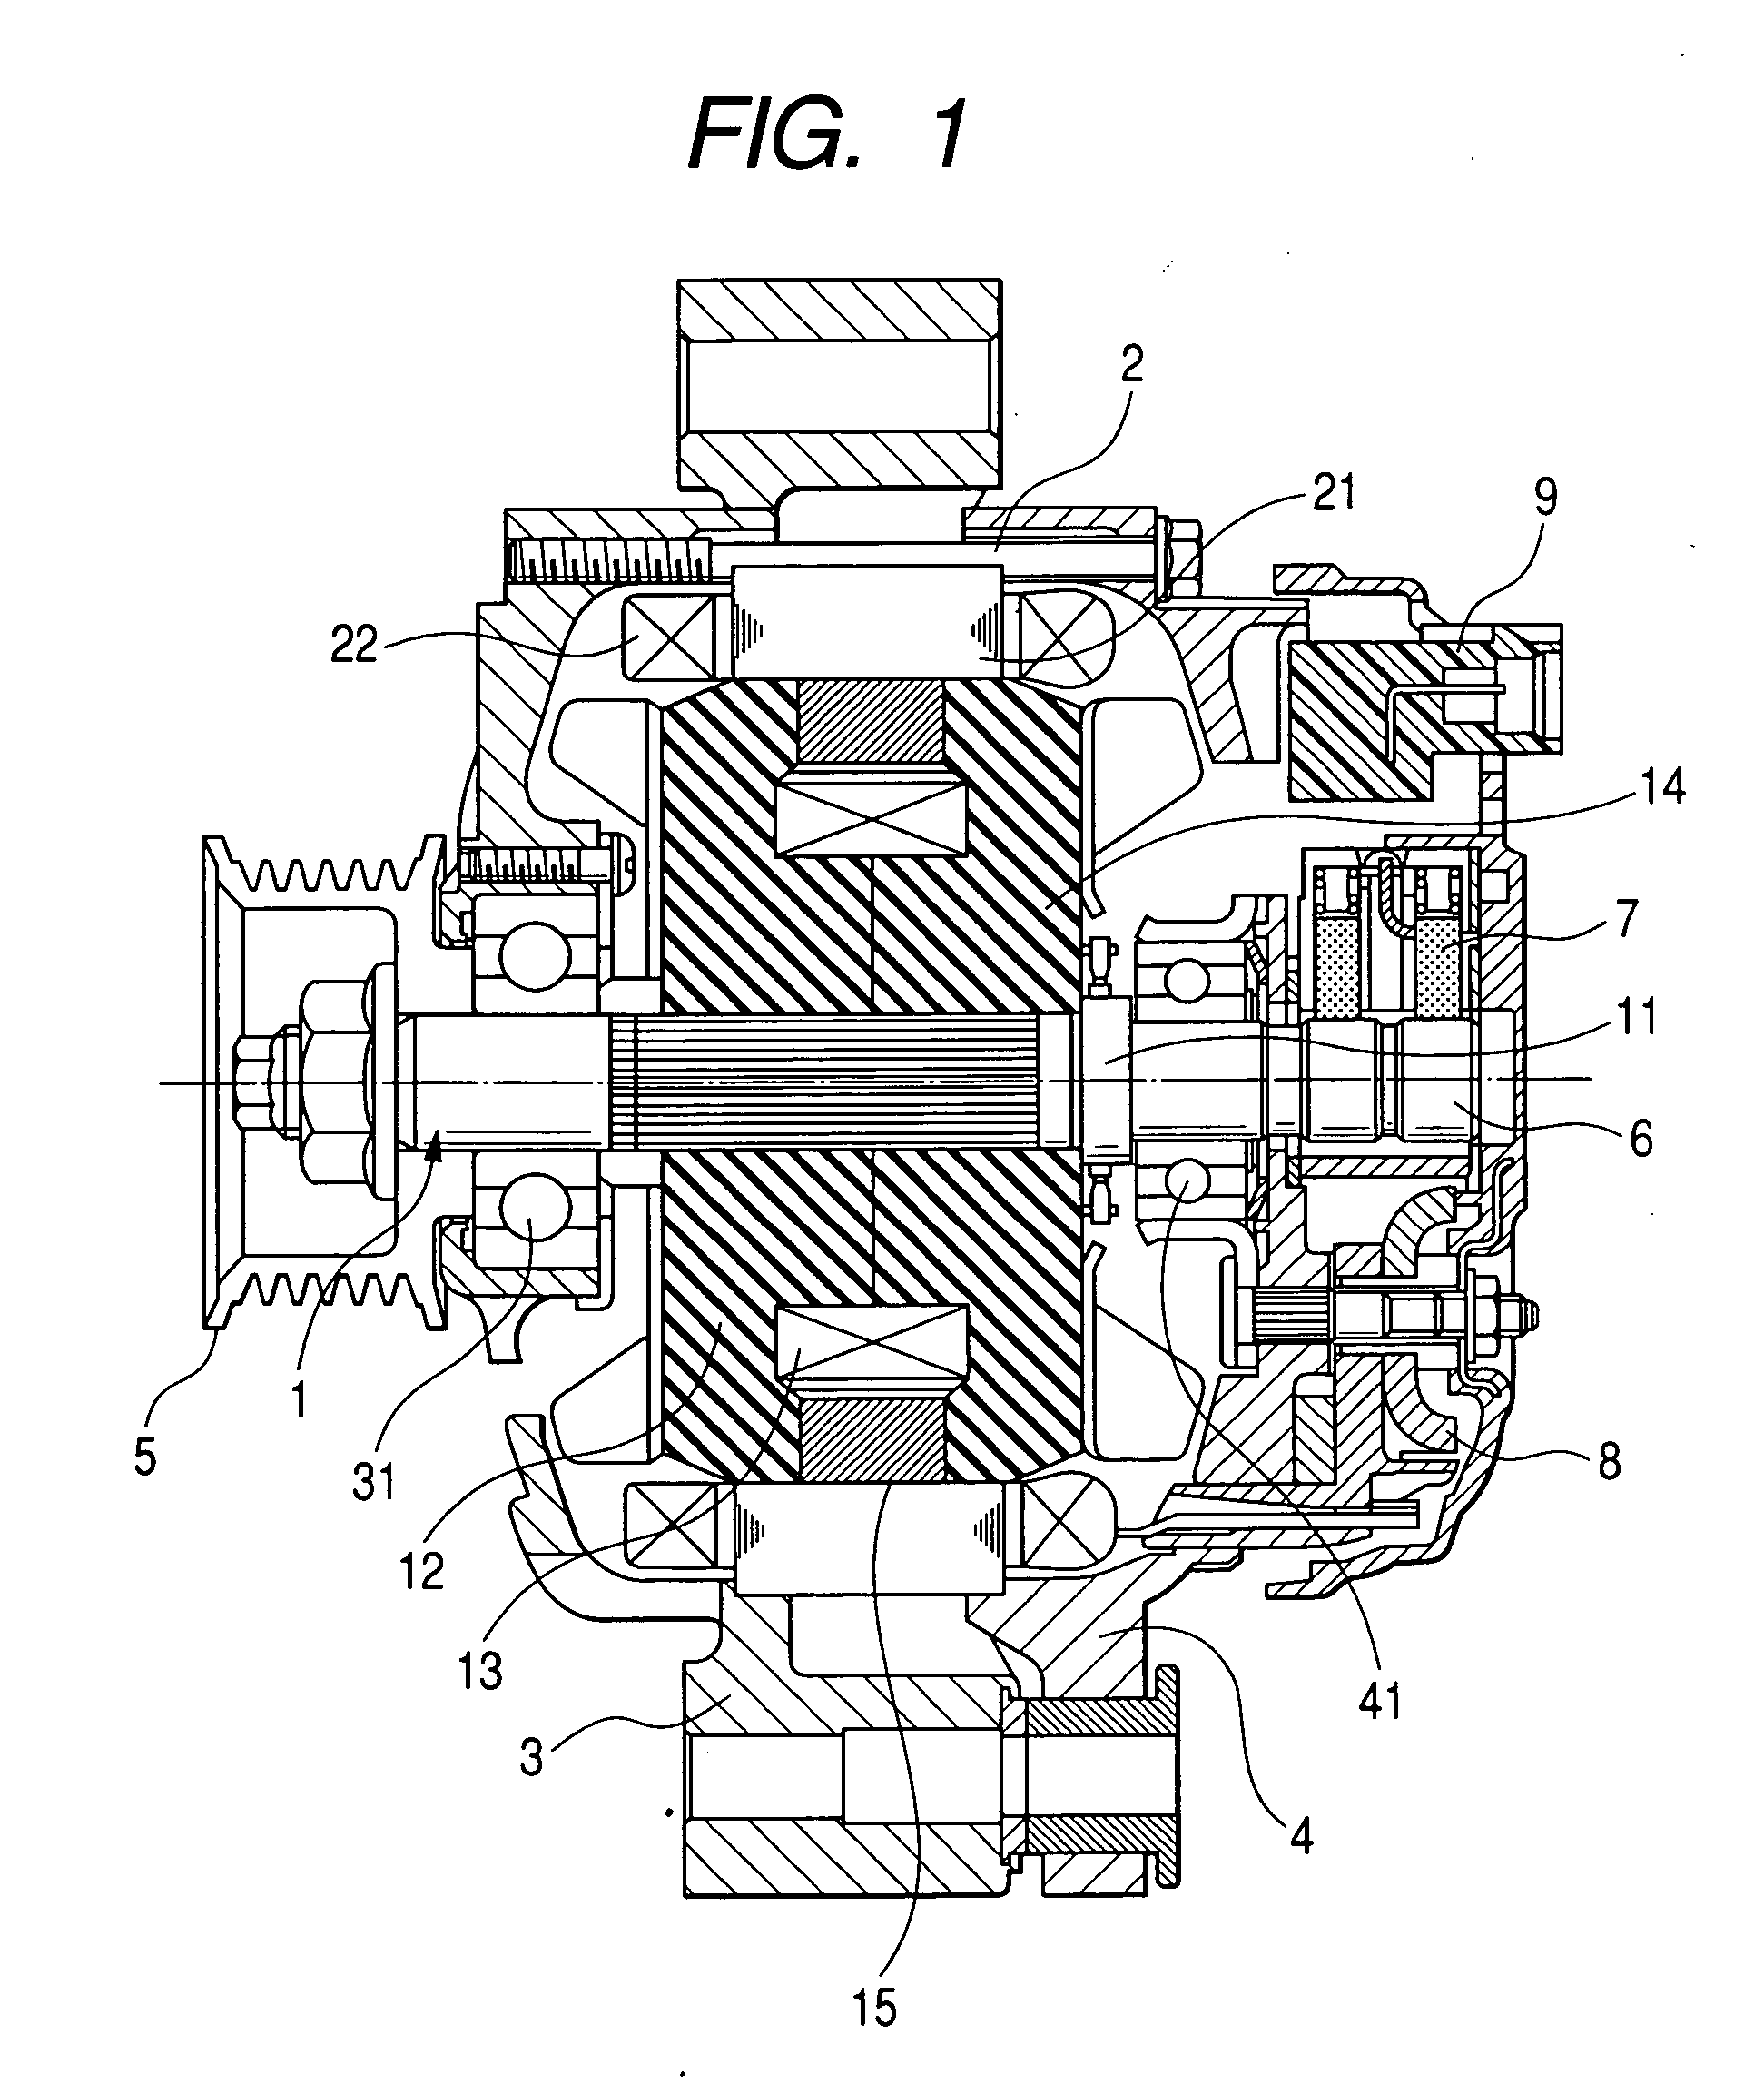 Rotor of rotary electric machine